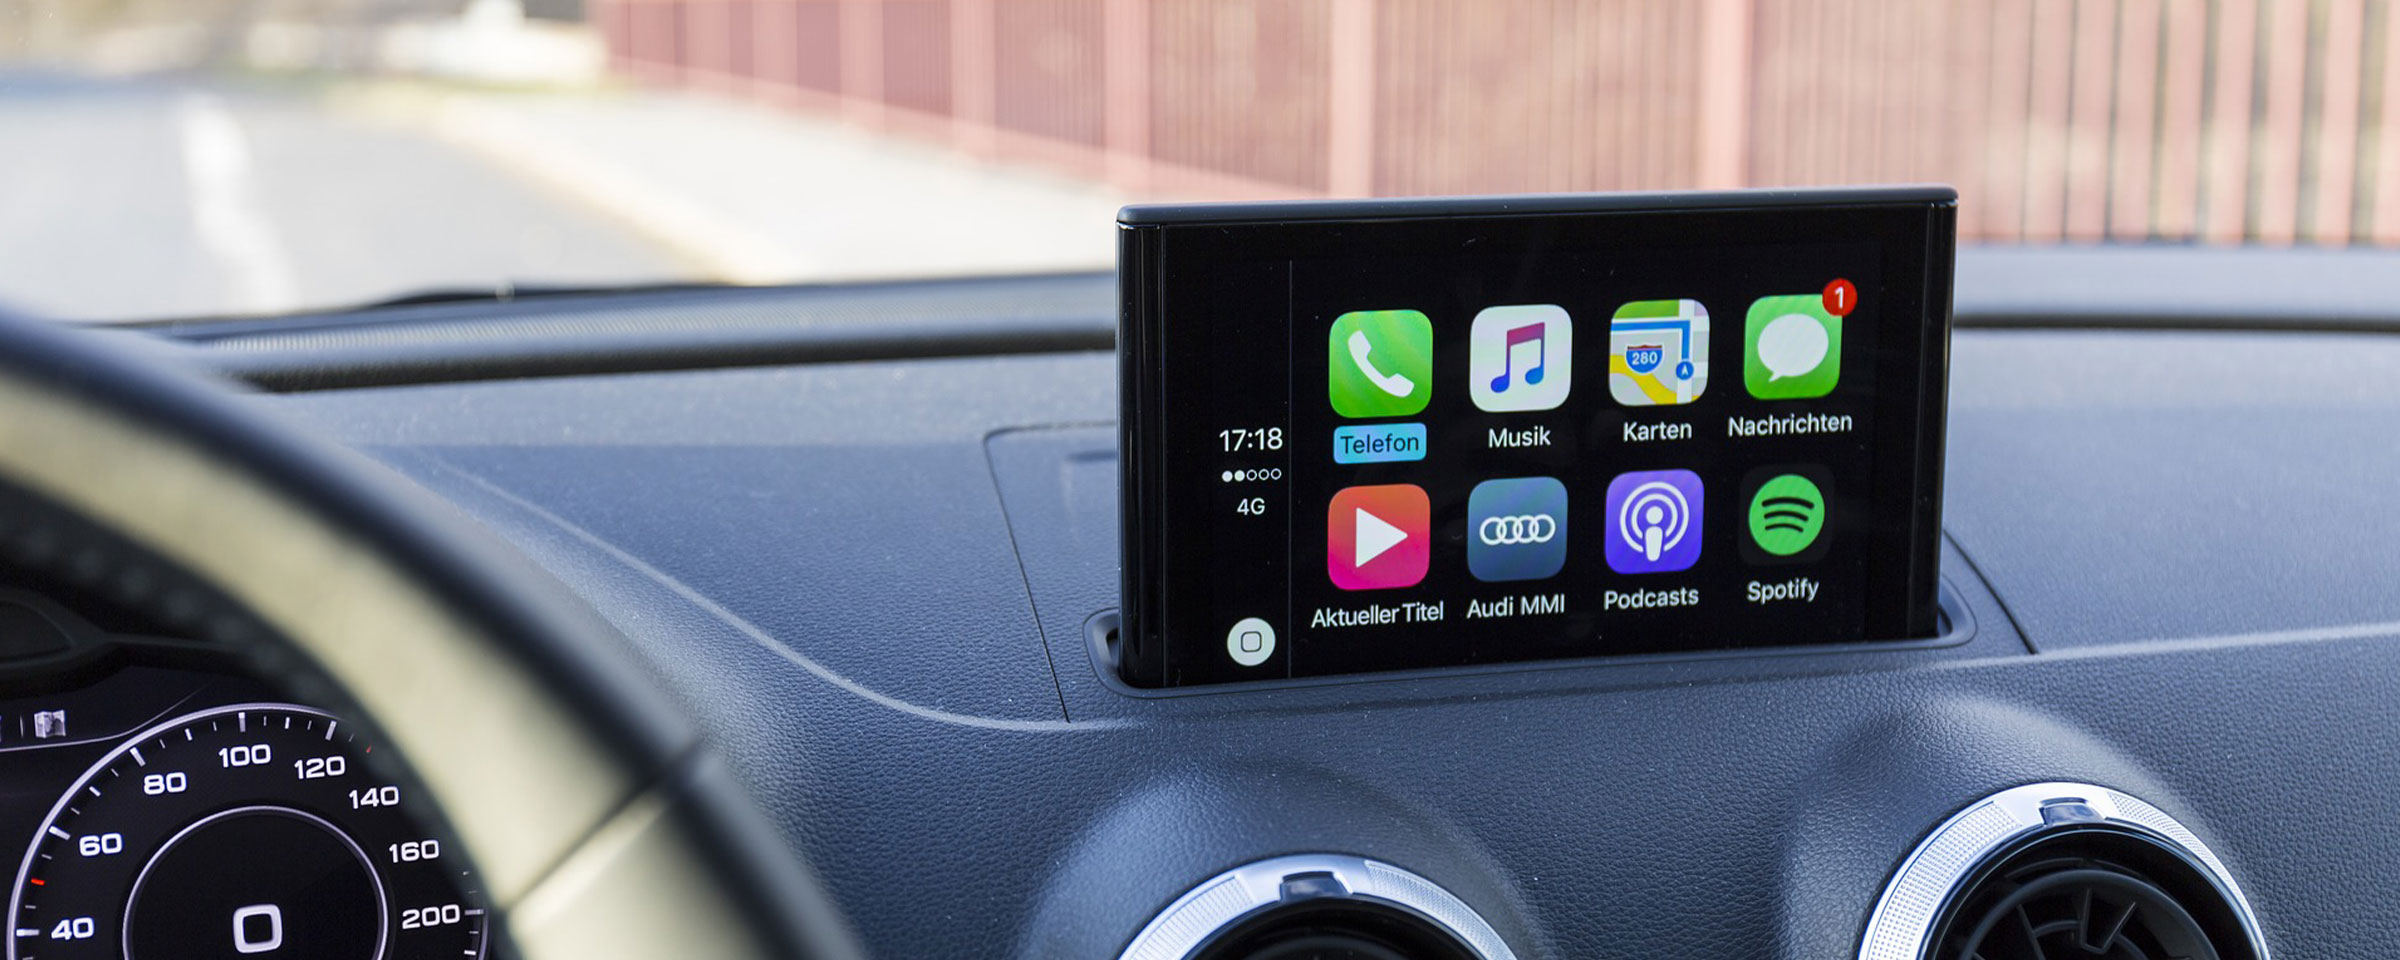 Apple CarPlay in einem Autoinnenraum